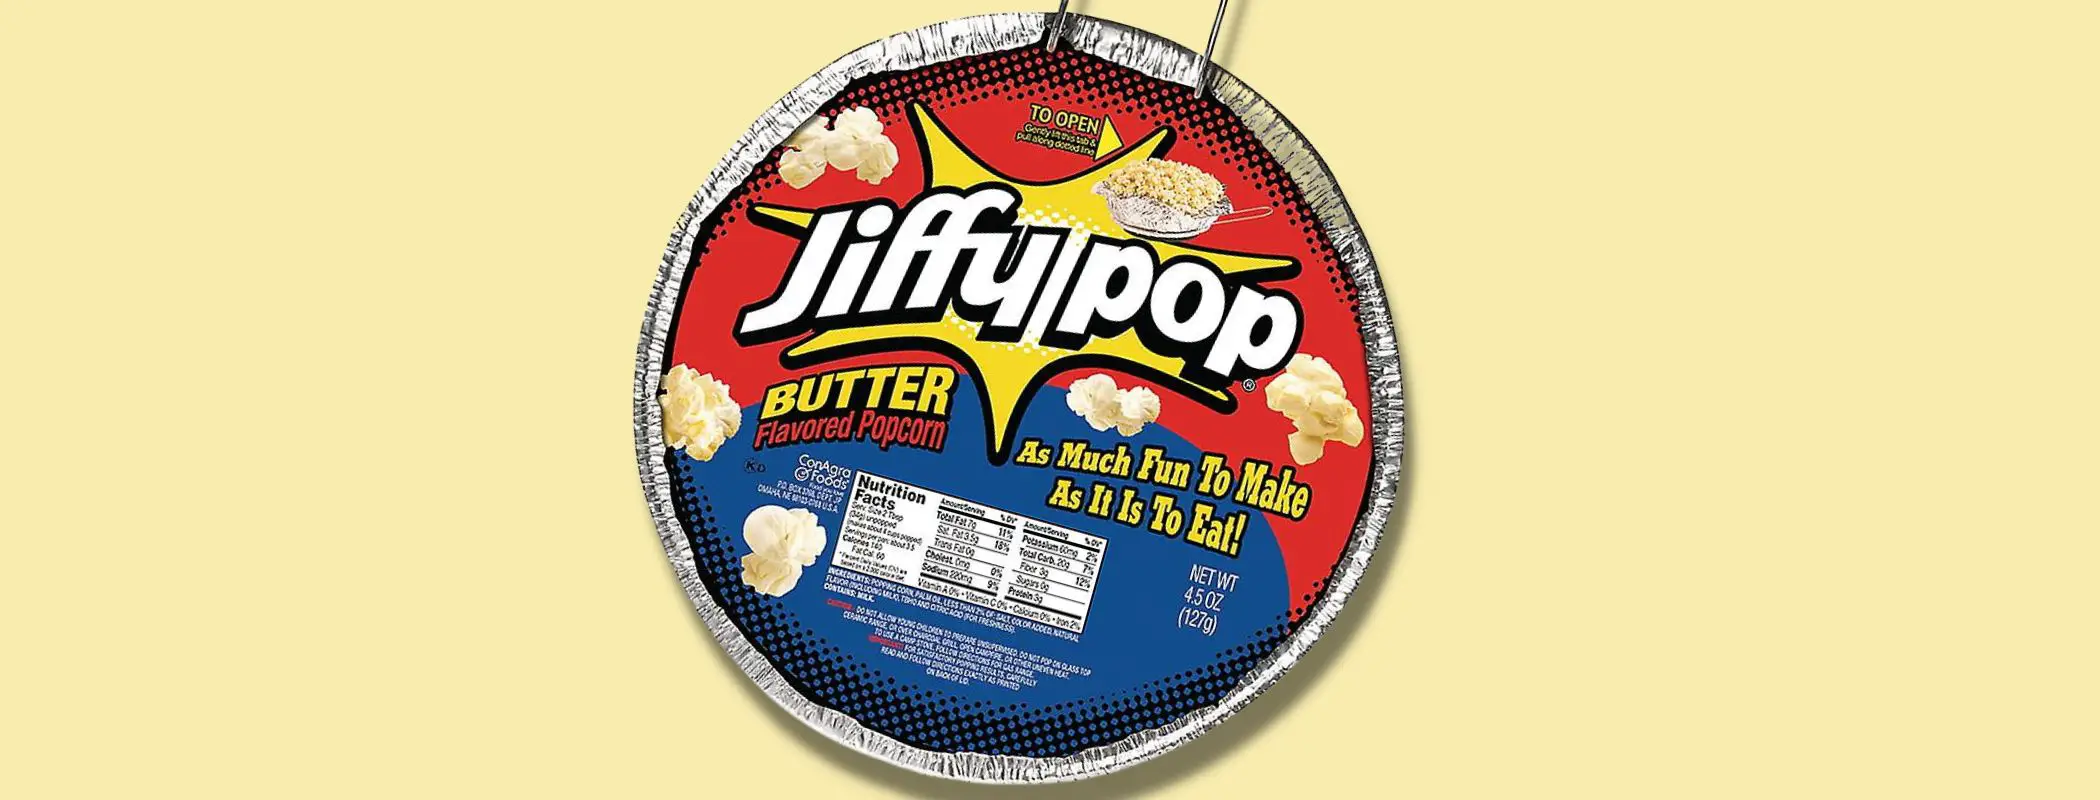 How to Make Jiffy Pop